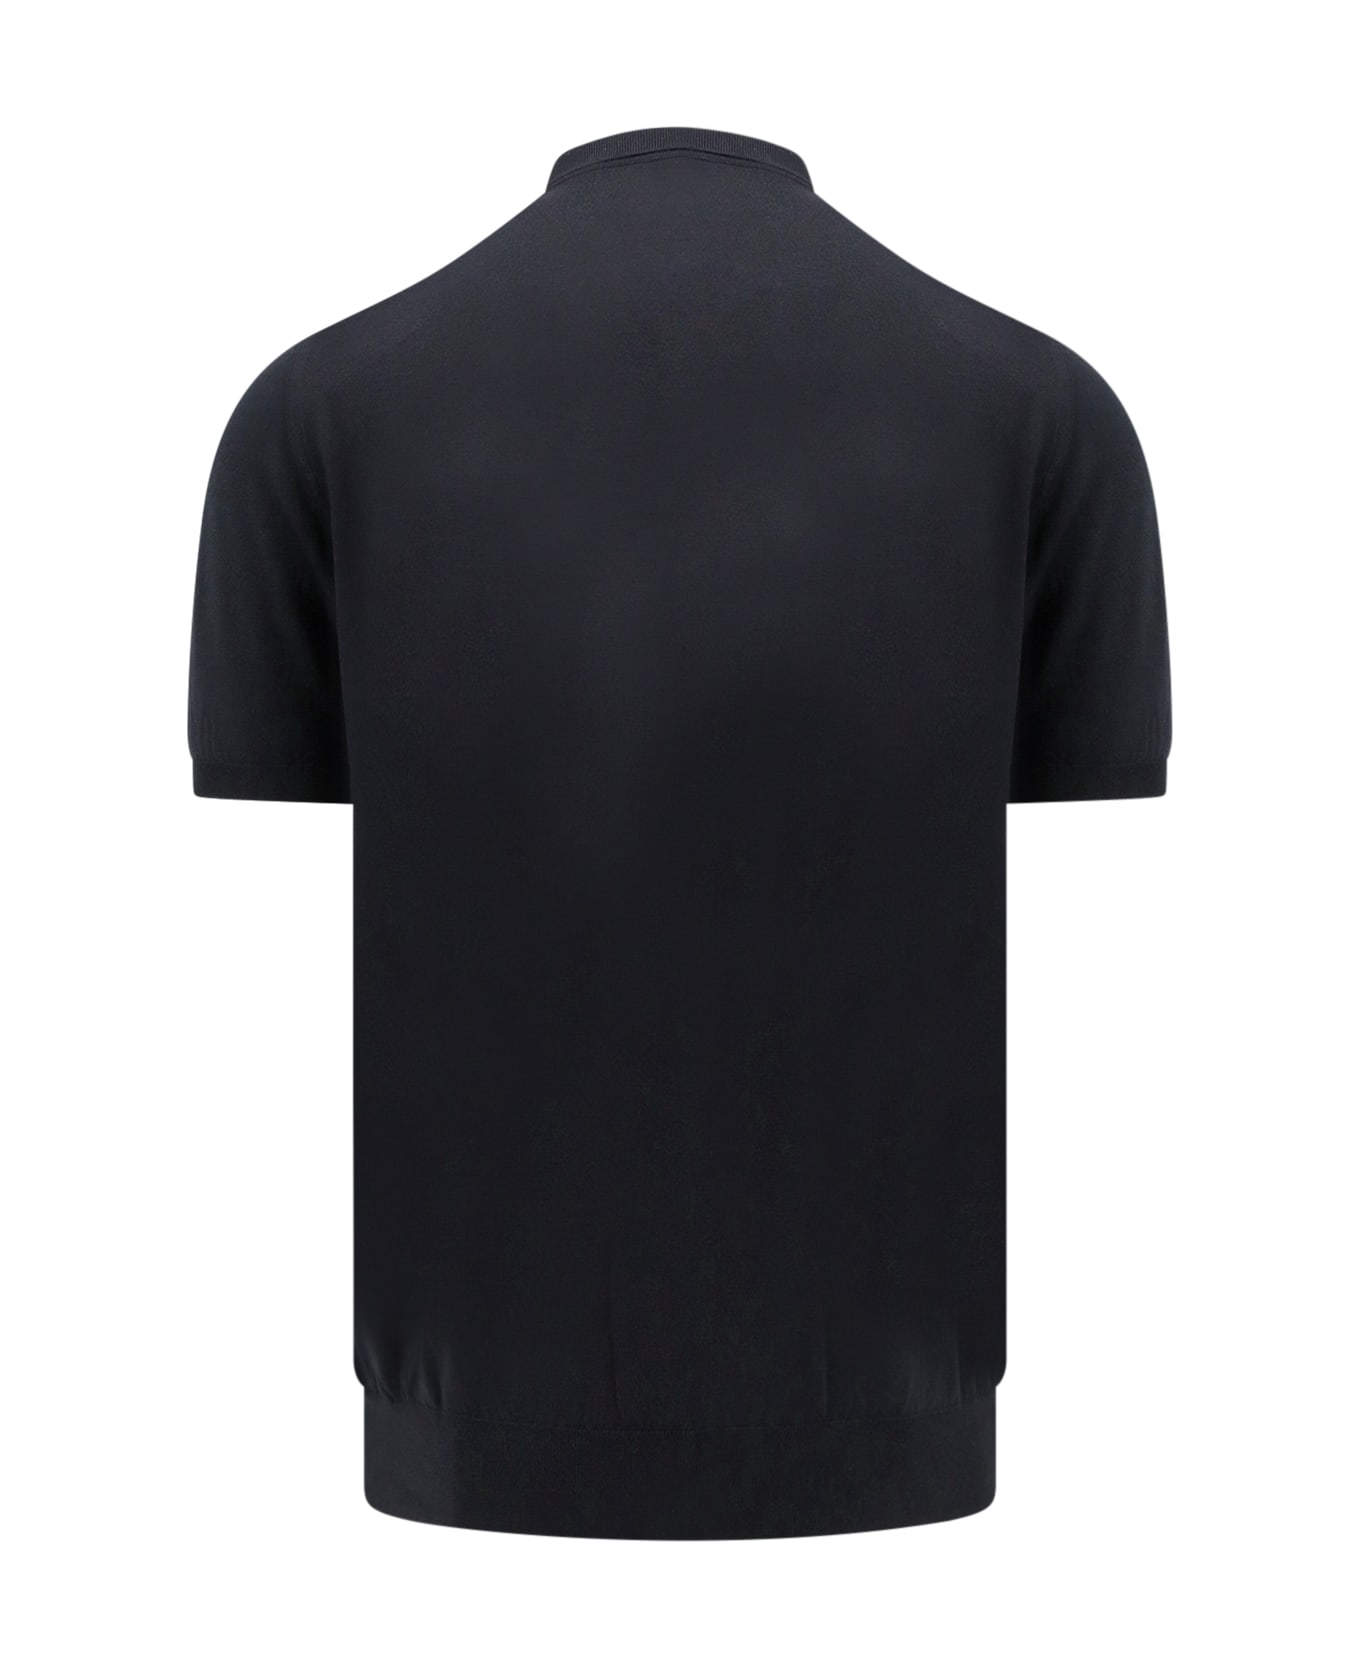 Kiton Polo Shirt - Black